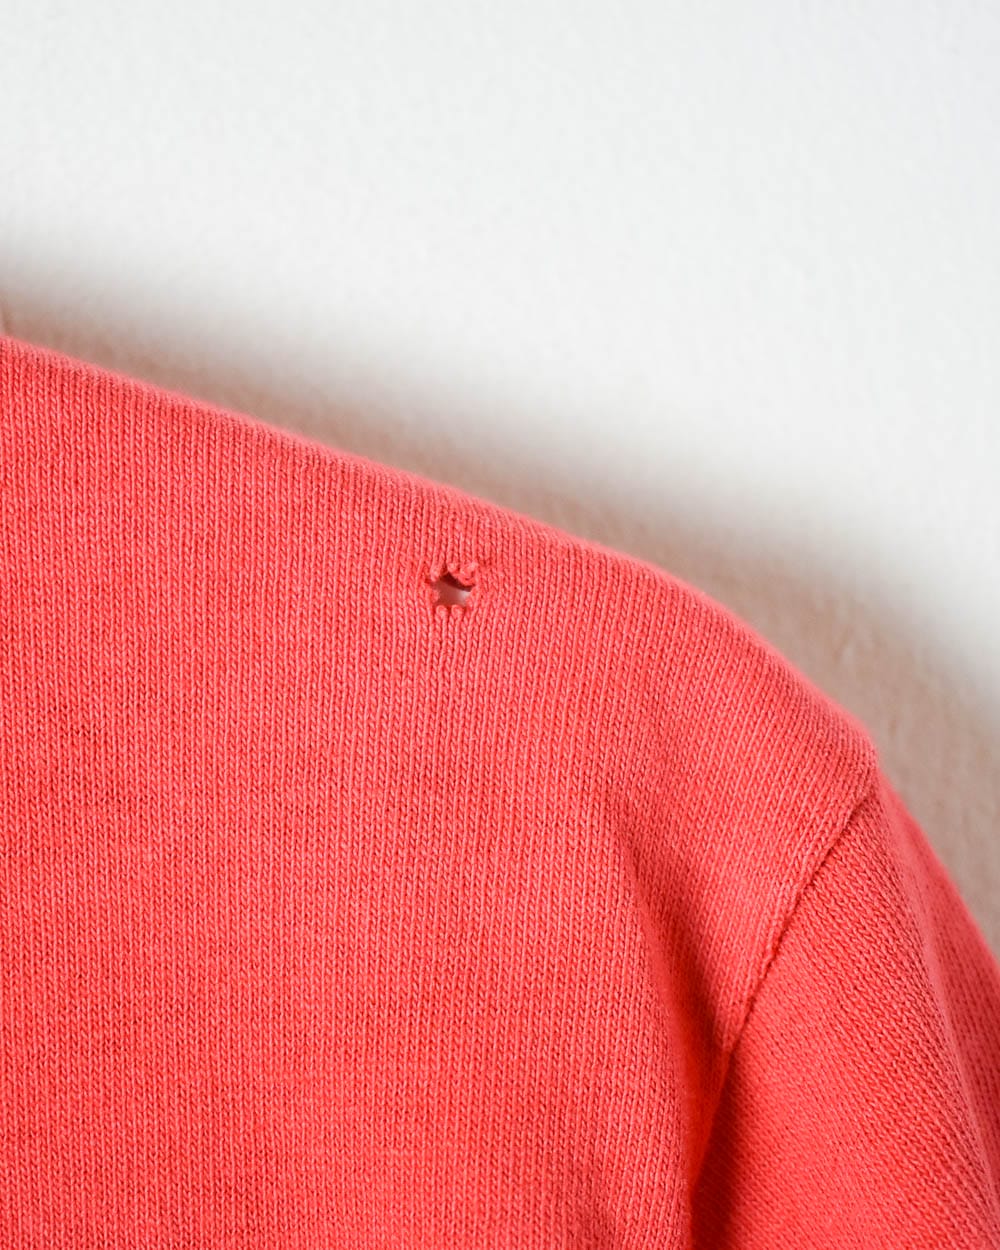 Red Blank Single Stitch T-Shirt - Small